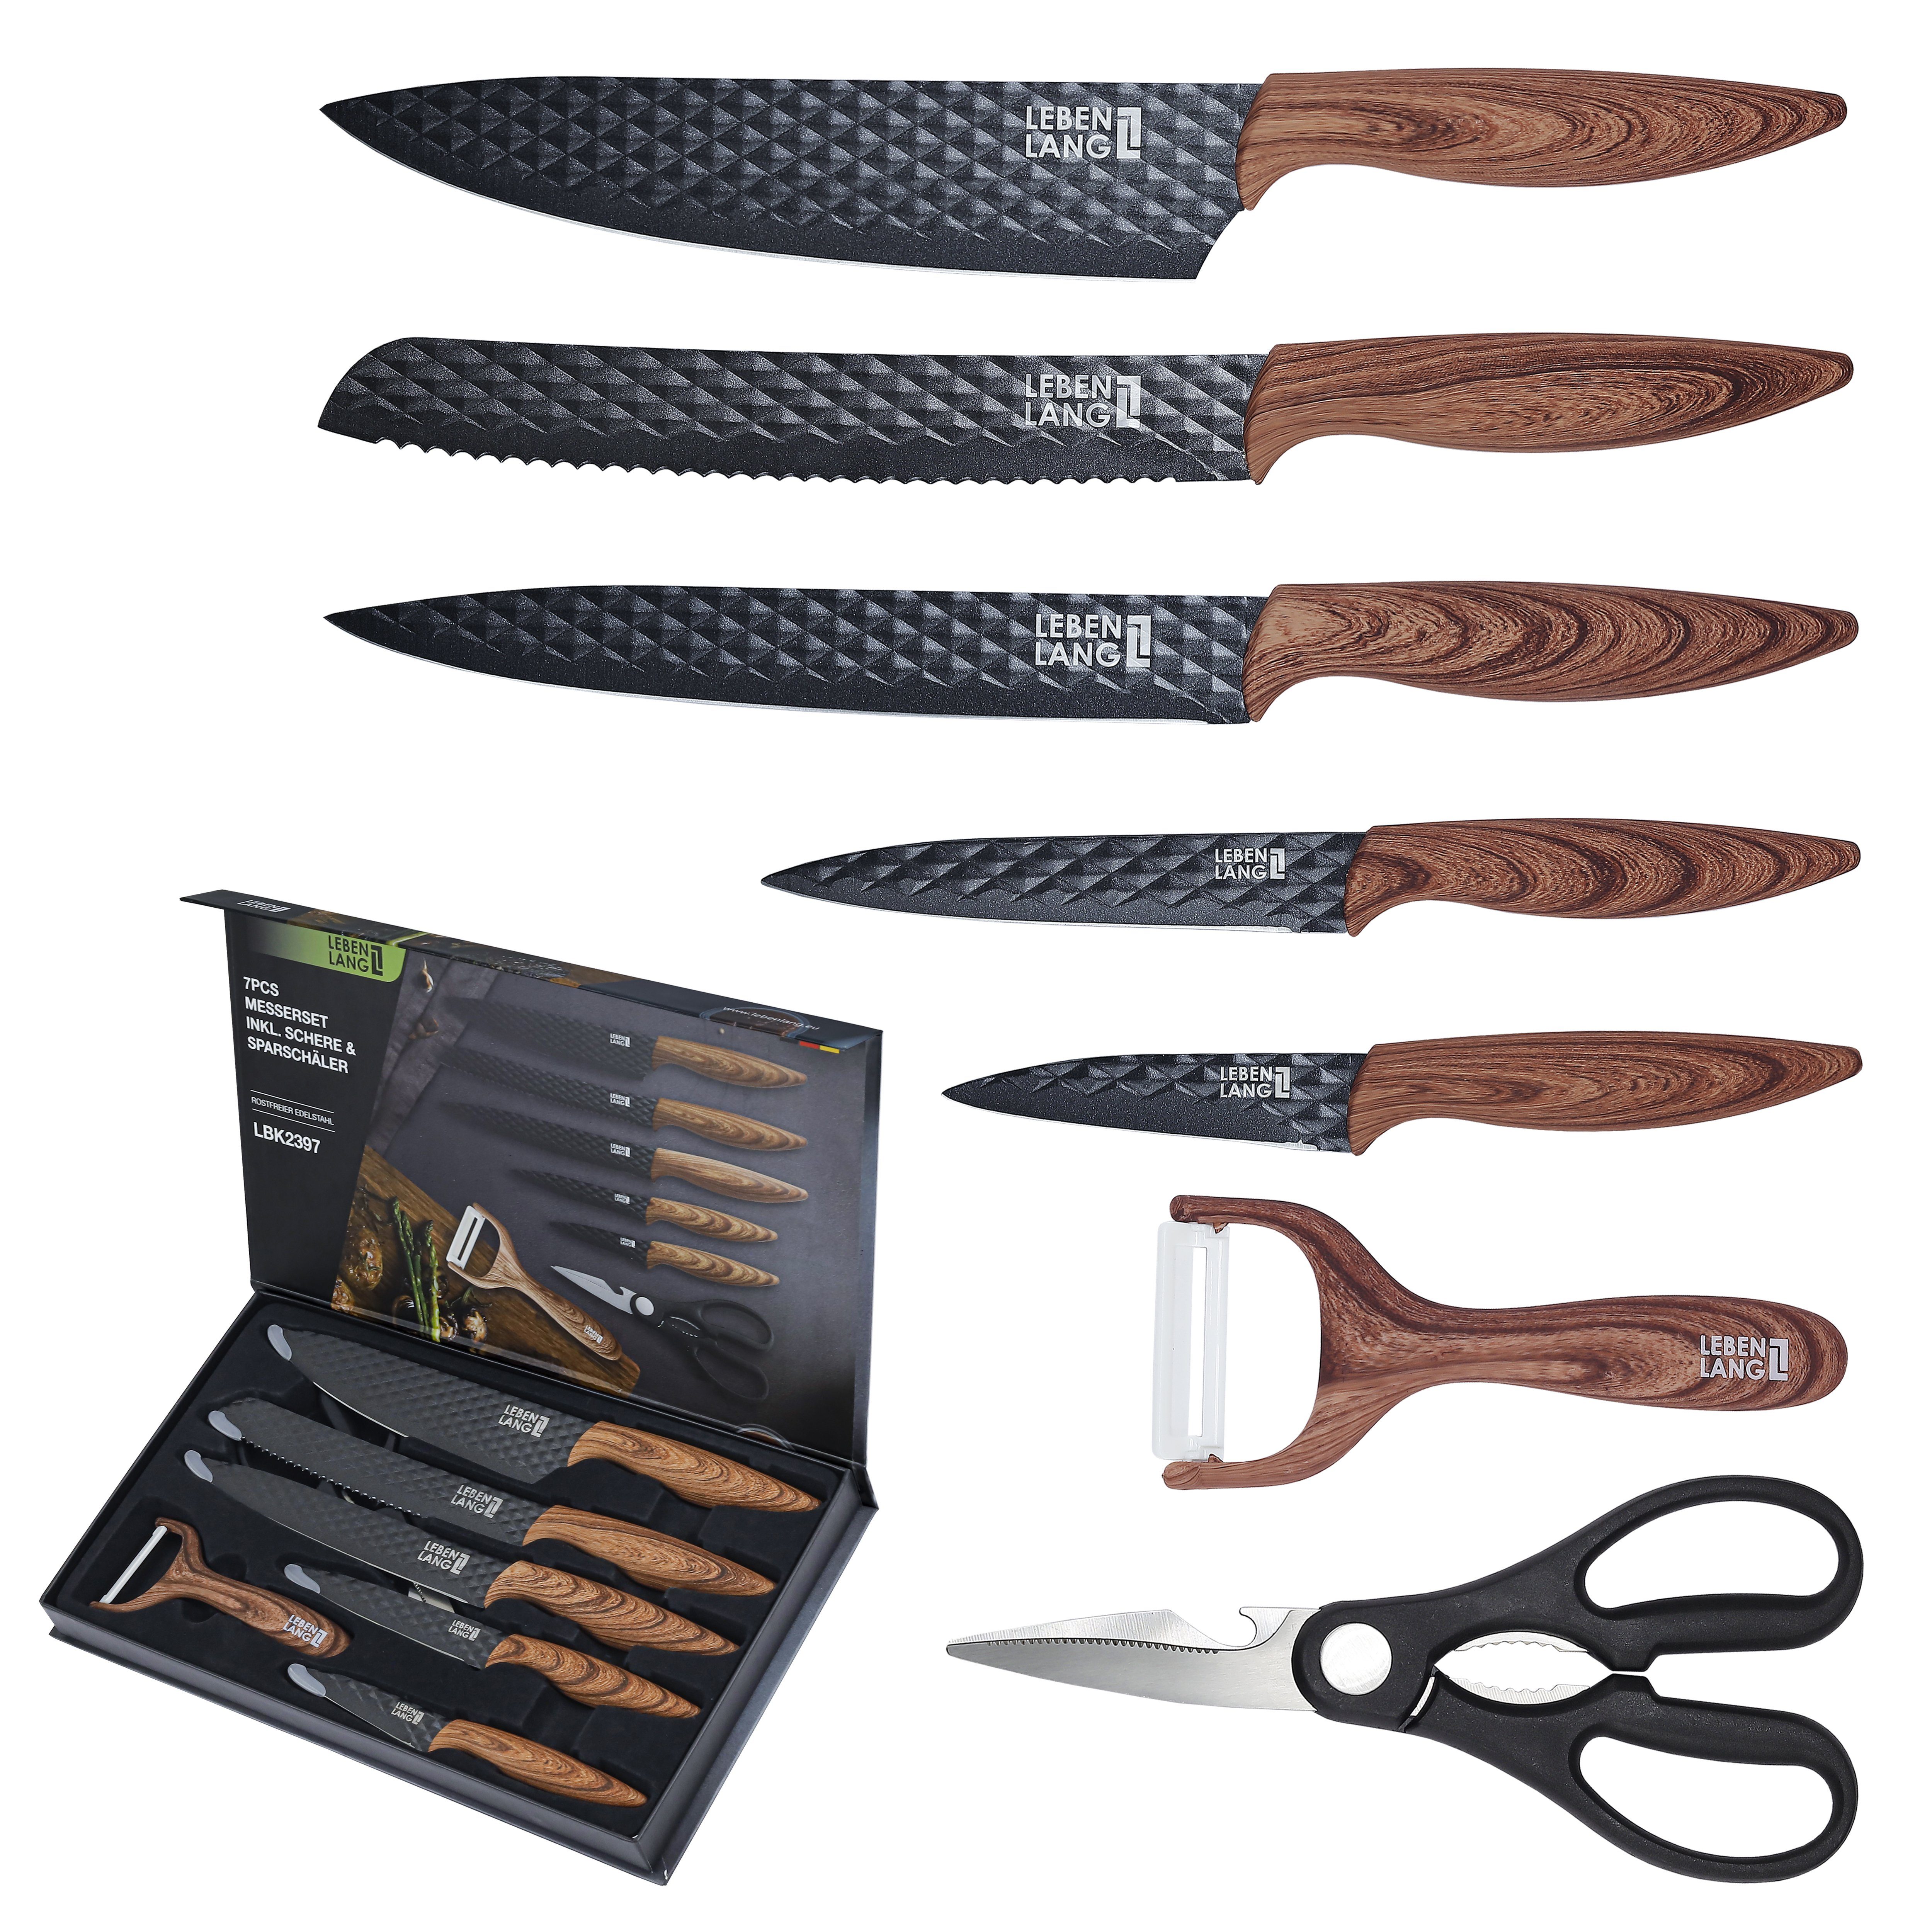 Lebenlang Messer-Set LEBENLANG Küchen Zubehör Messerset 7 teilig